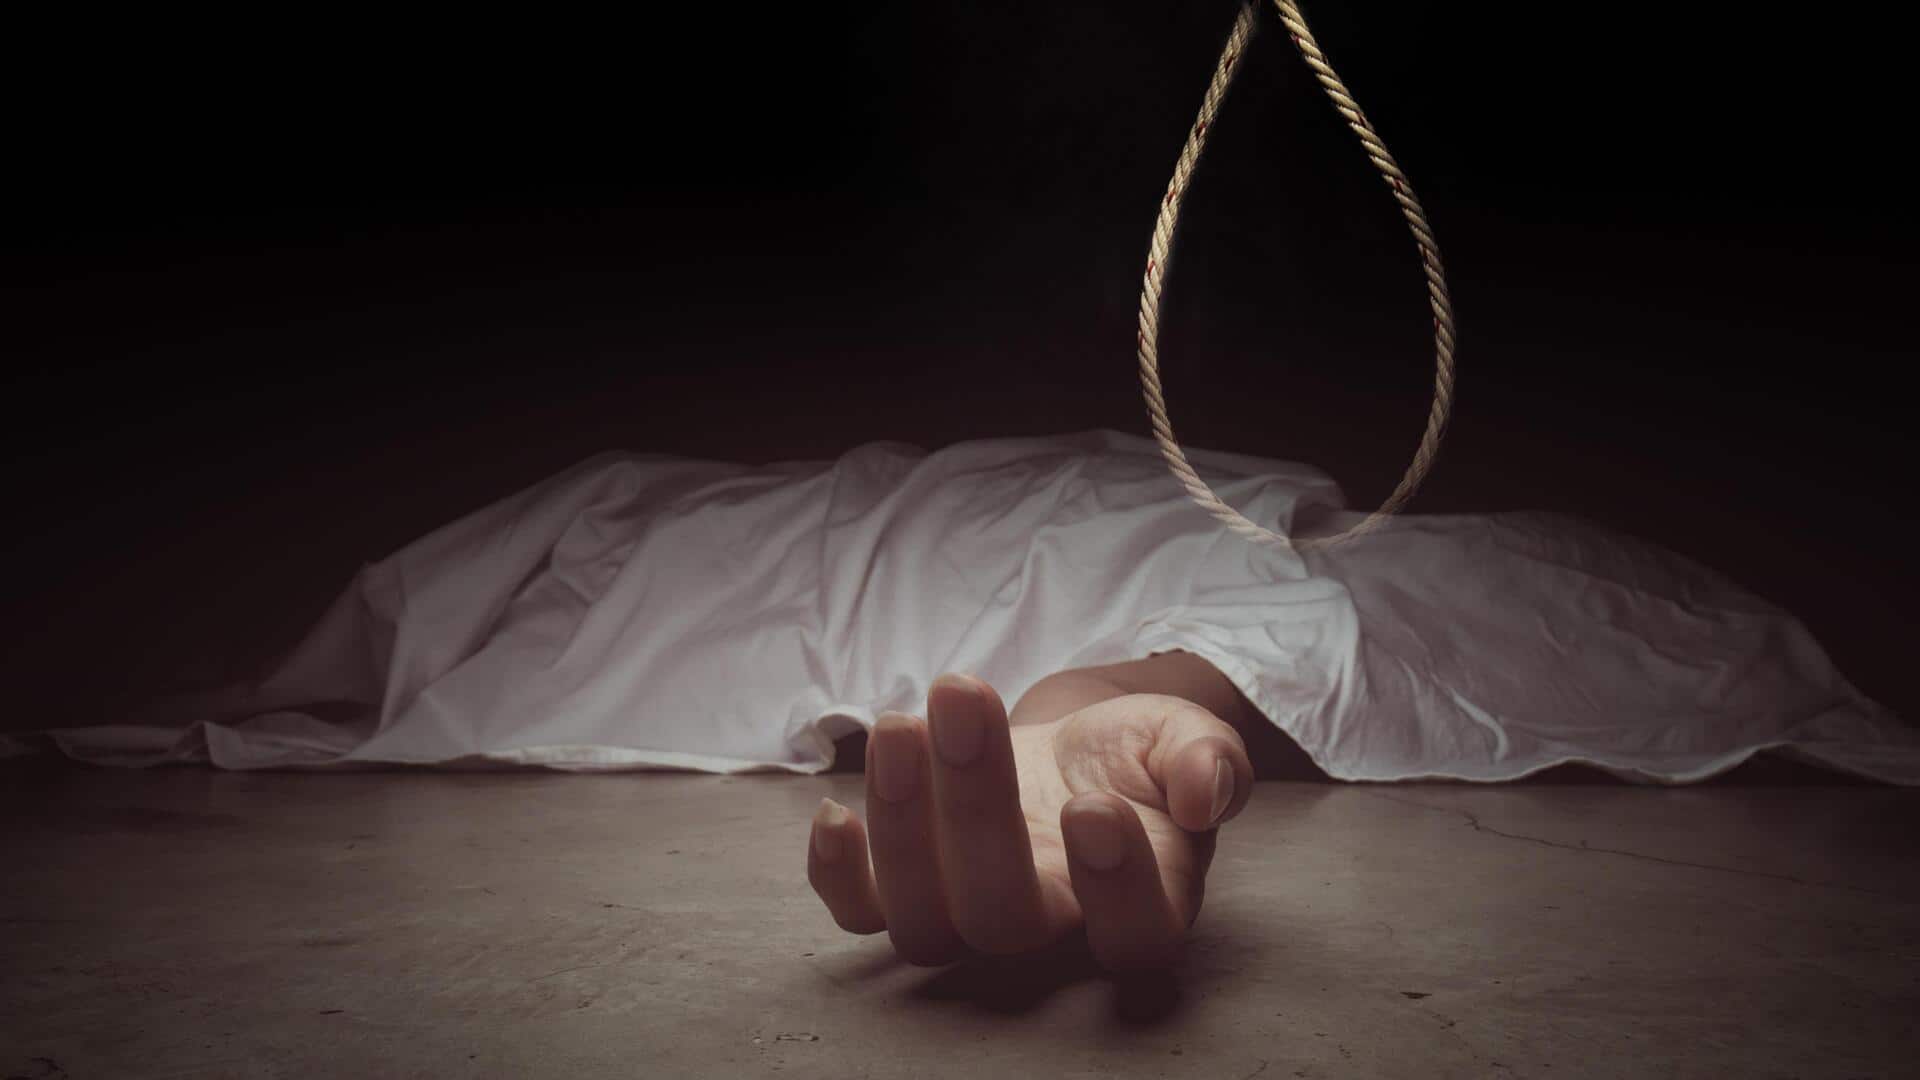 Tamil Nadu: Man ends life after NEET aspirant son's suicide